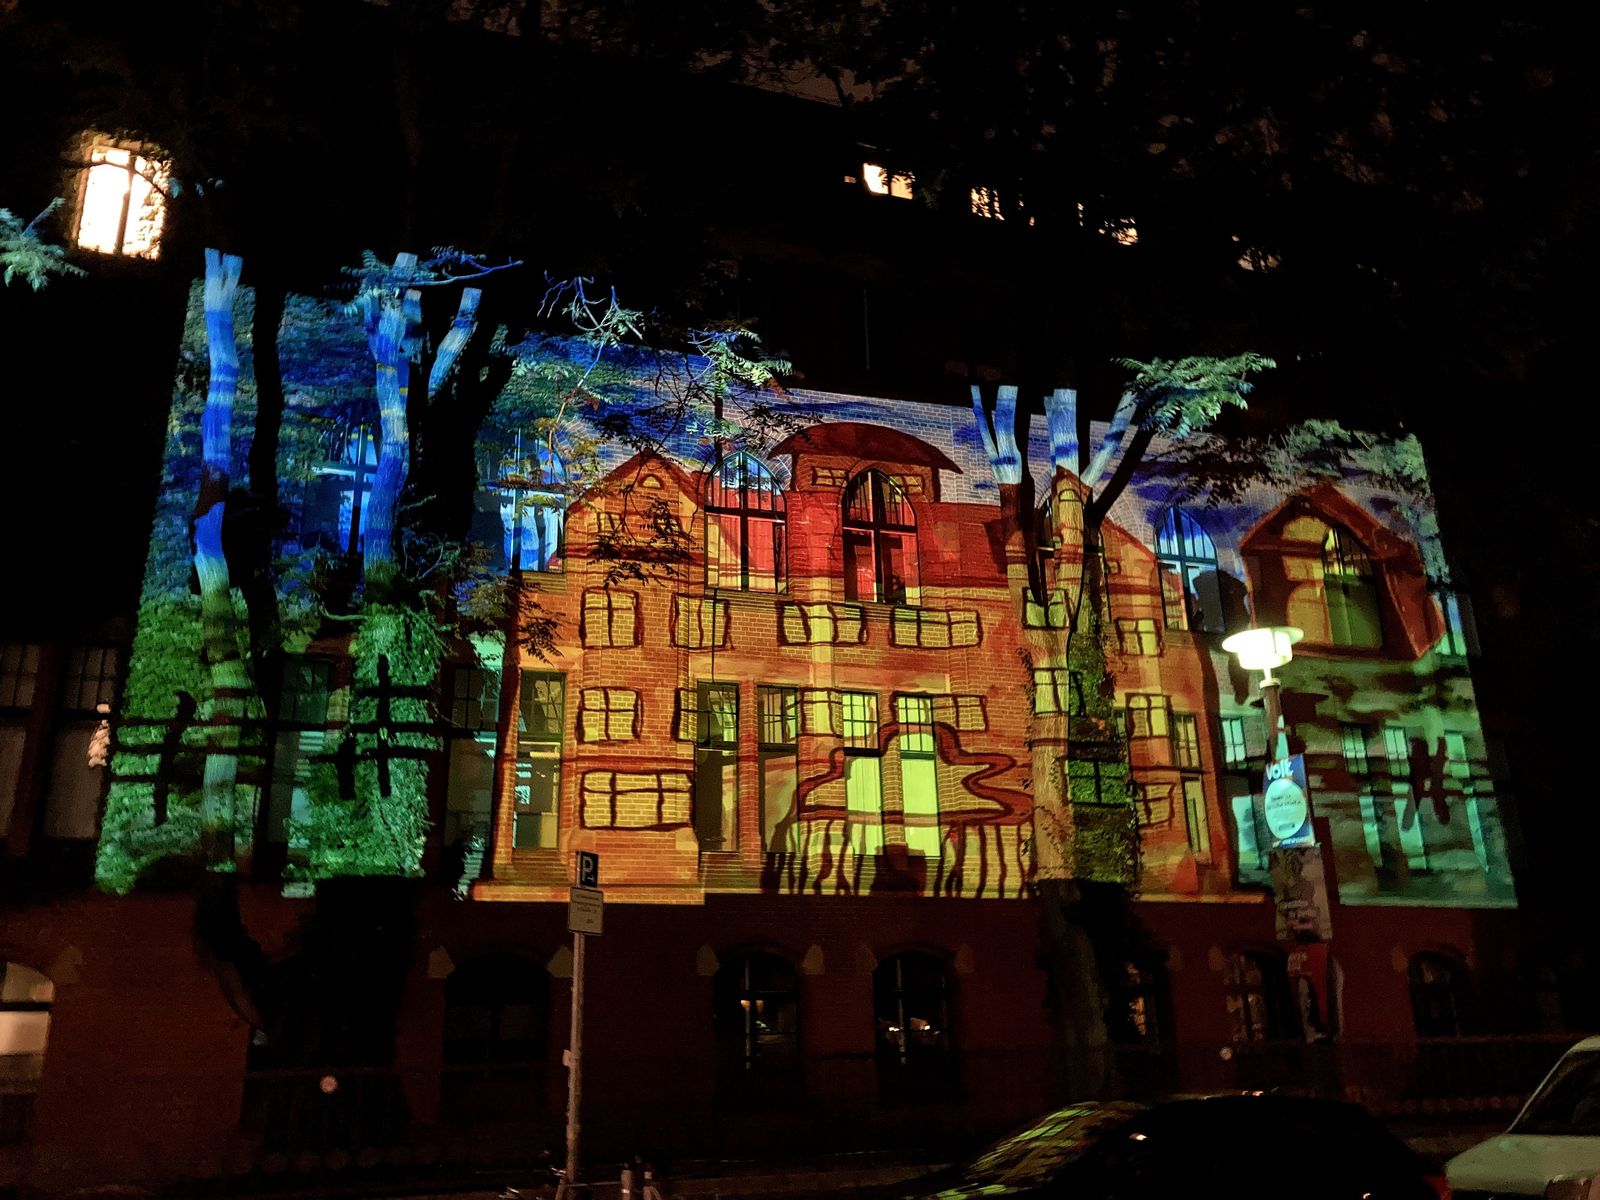 Festival of Lights, Projektion der Bilder aus dem Offenen Atelier auf die Fassade des St. Hedwig Krankenhauses, September 2021